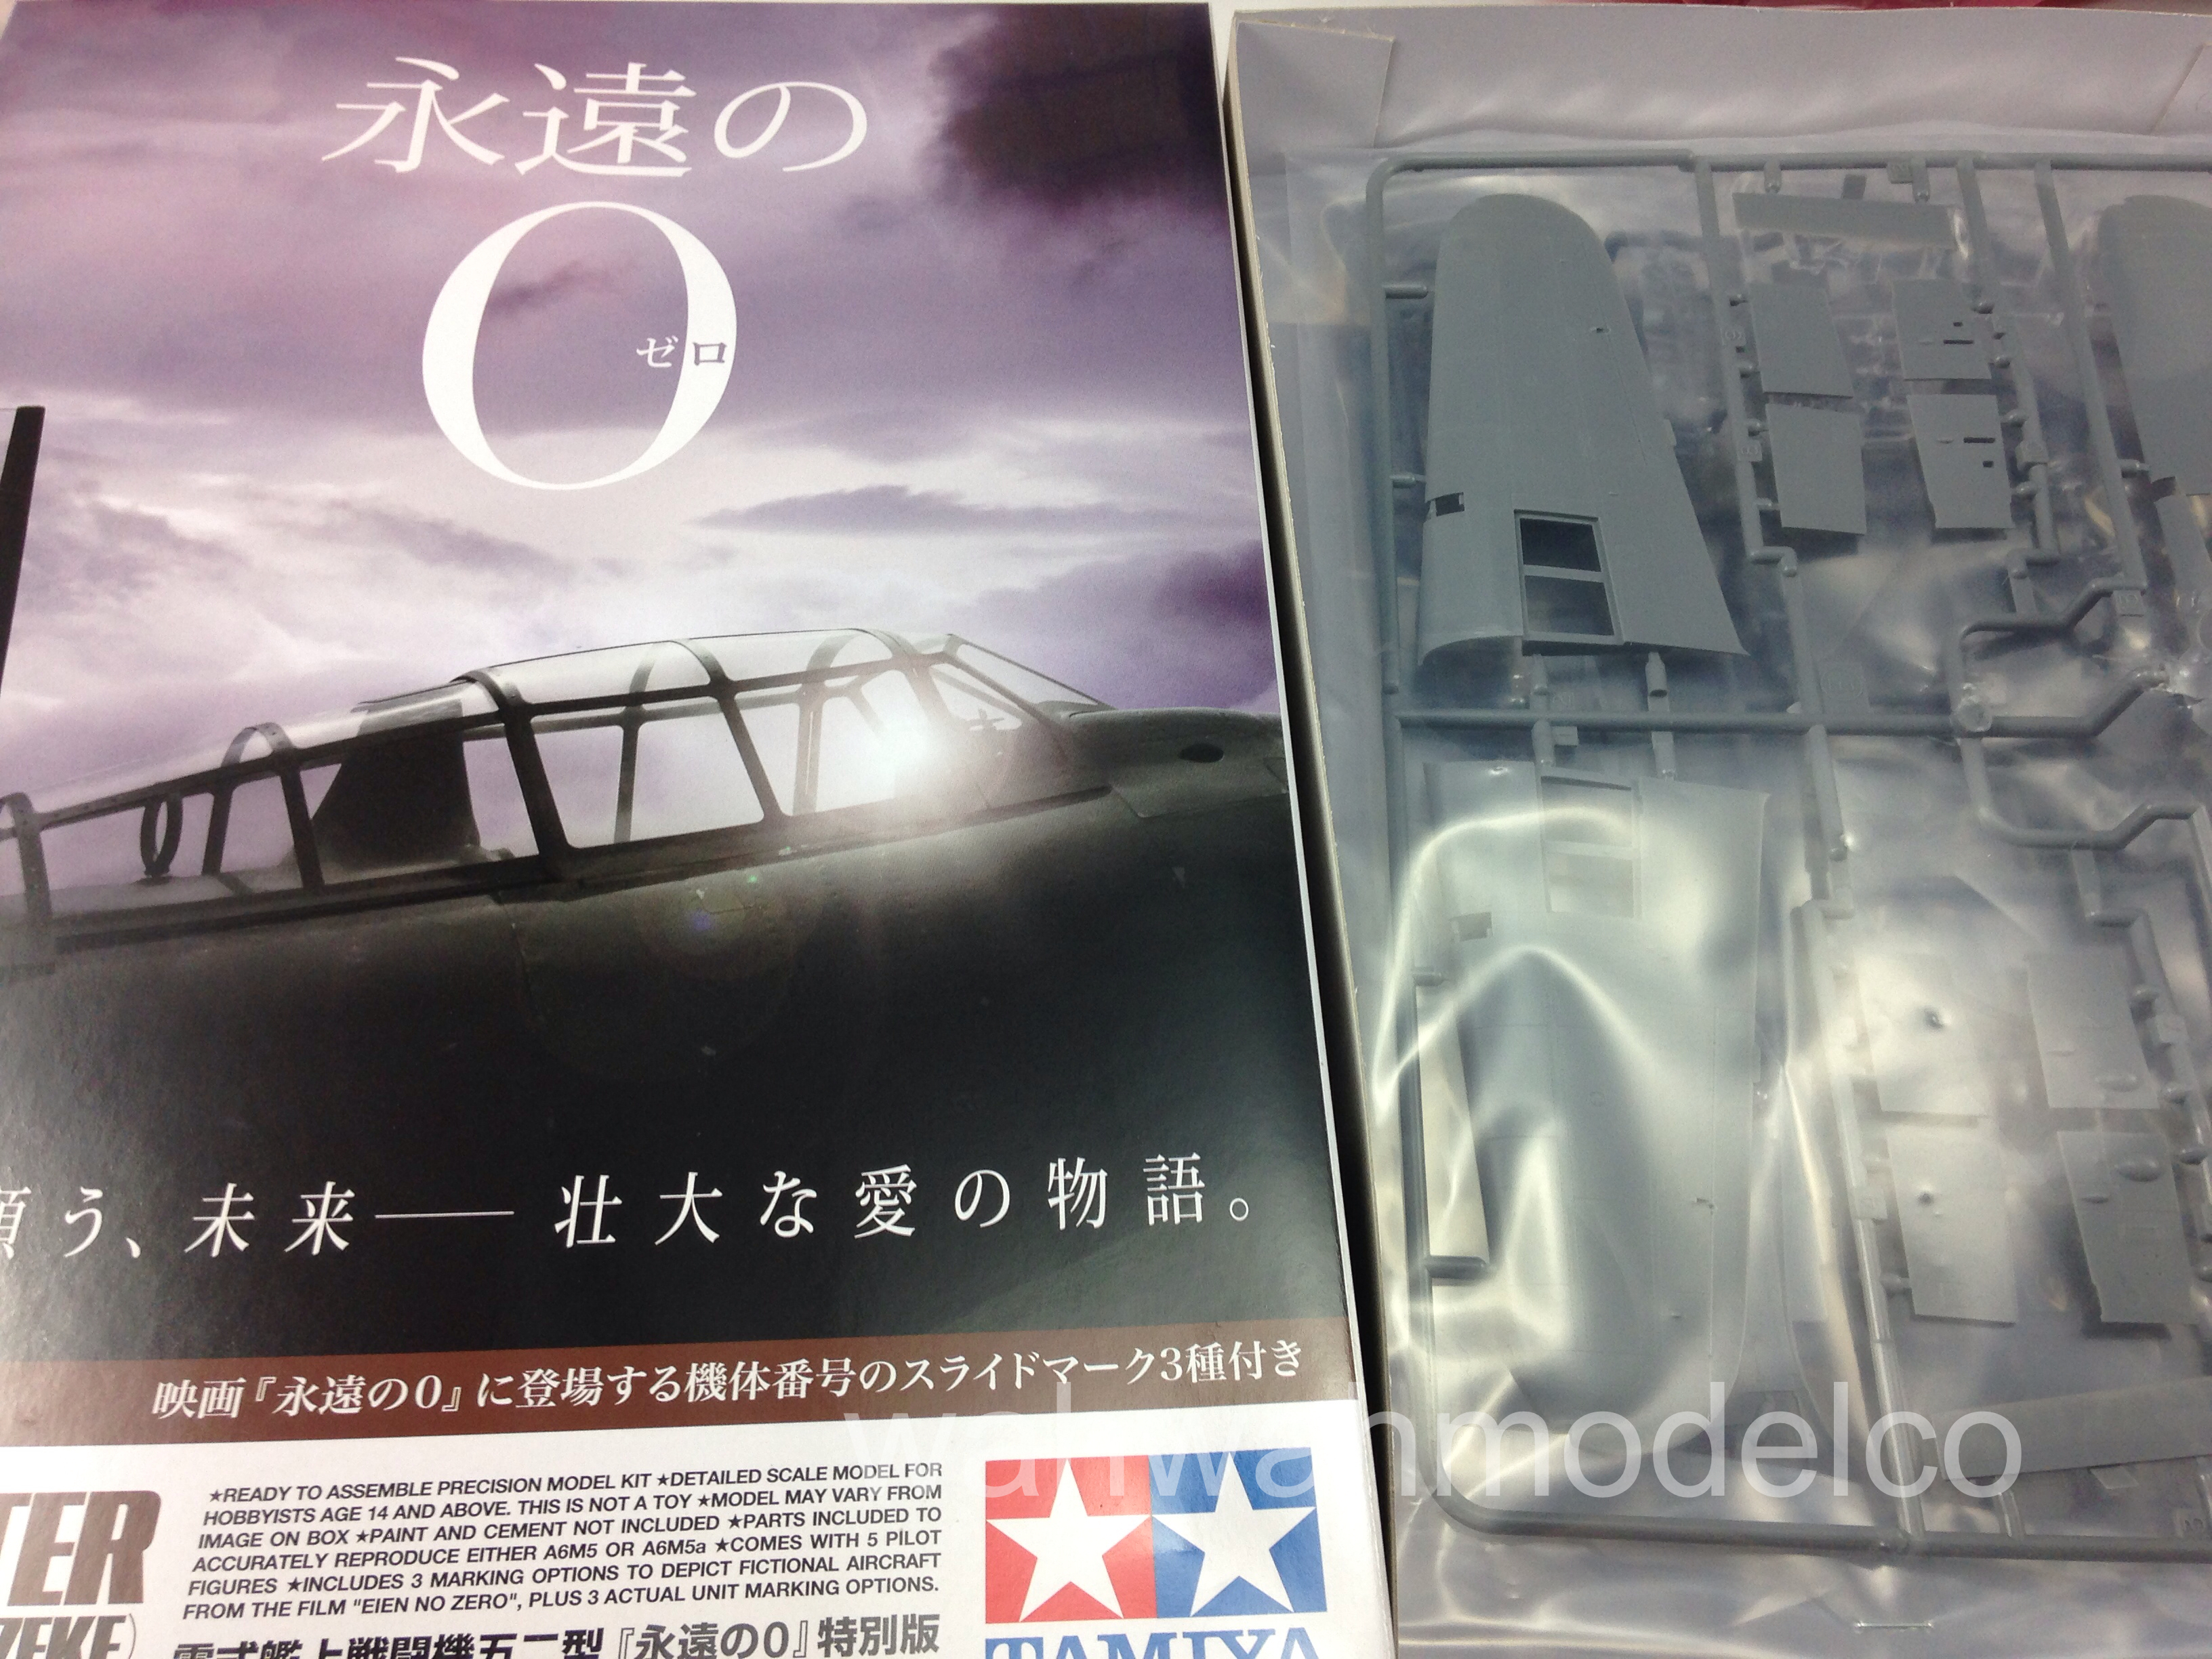 Tamiya 25167 1/48 A6M5 Zero Fighter (Zeke) – “Eien no Zero” Plastic Model  kit